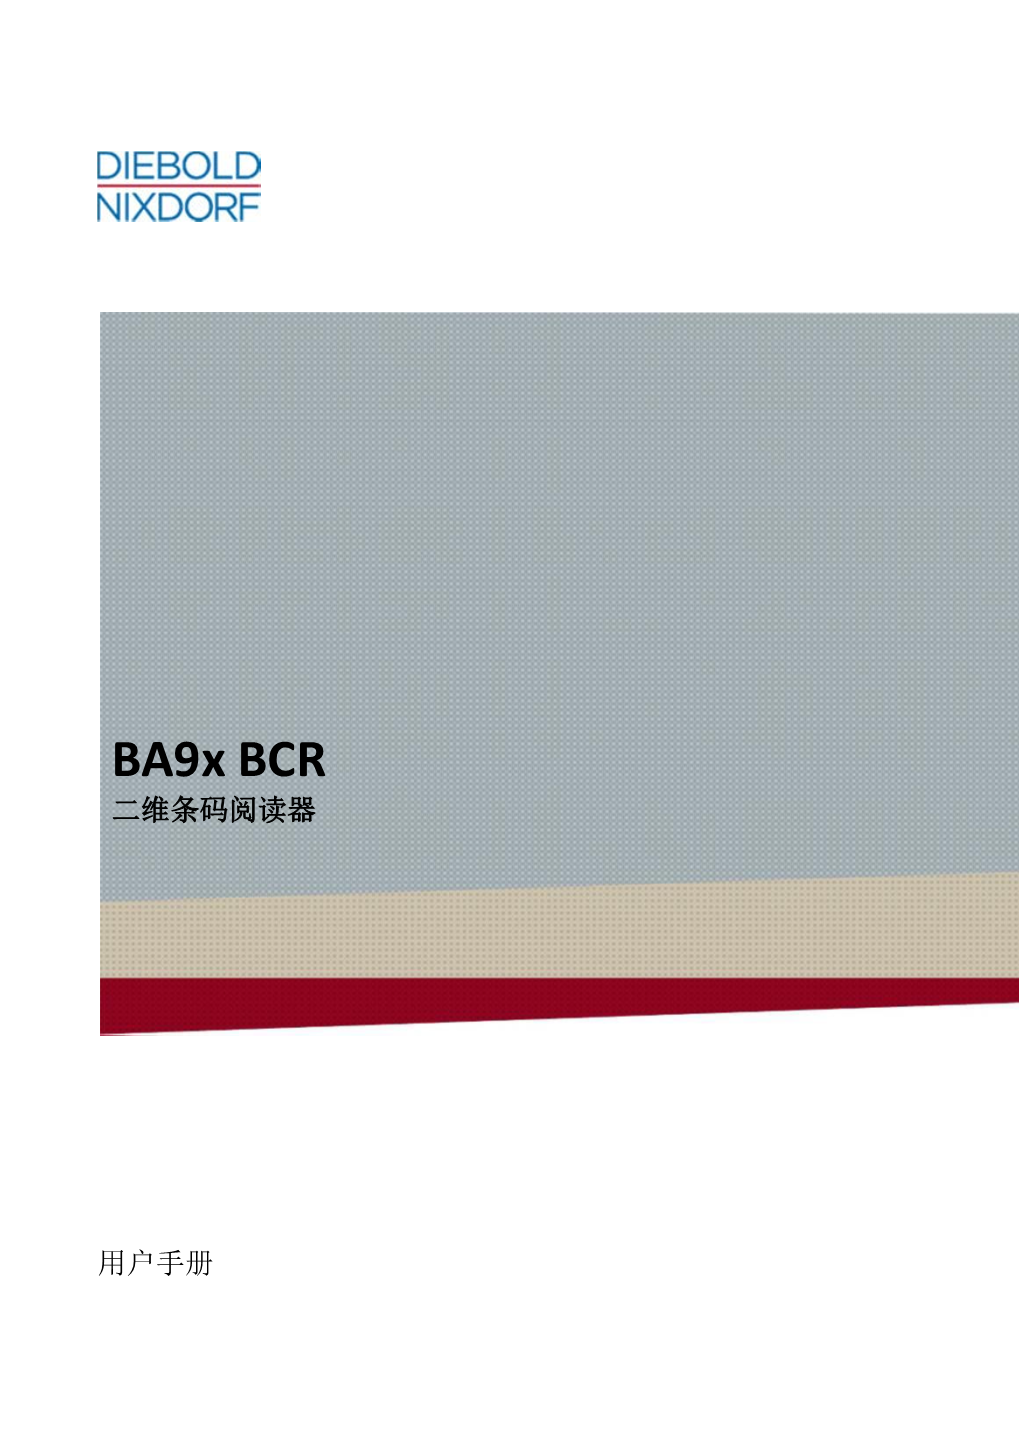 Diebold Nixdorf Ba9x BCR 2D Barcode Reader User Manual SC